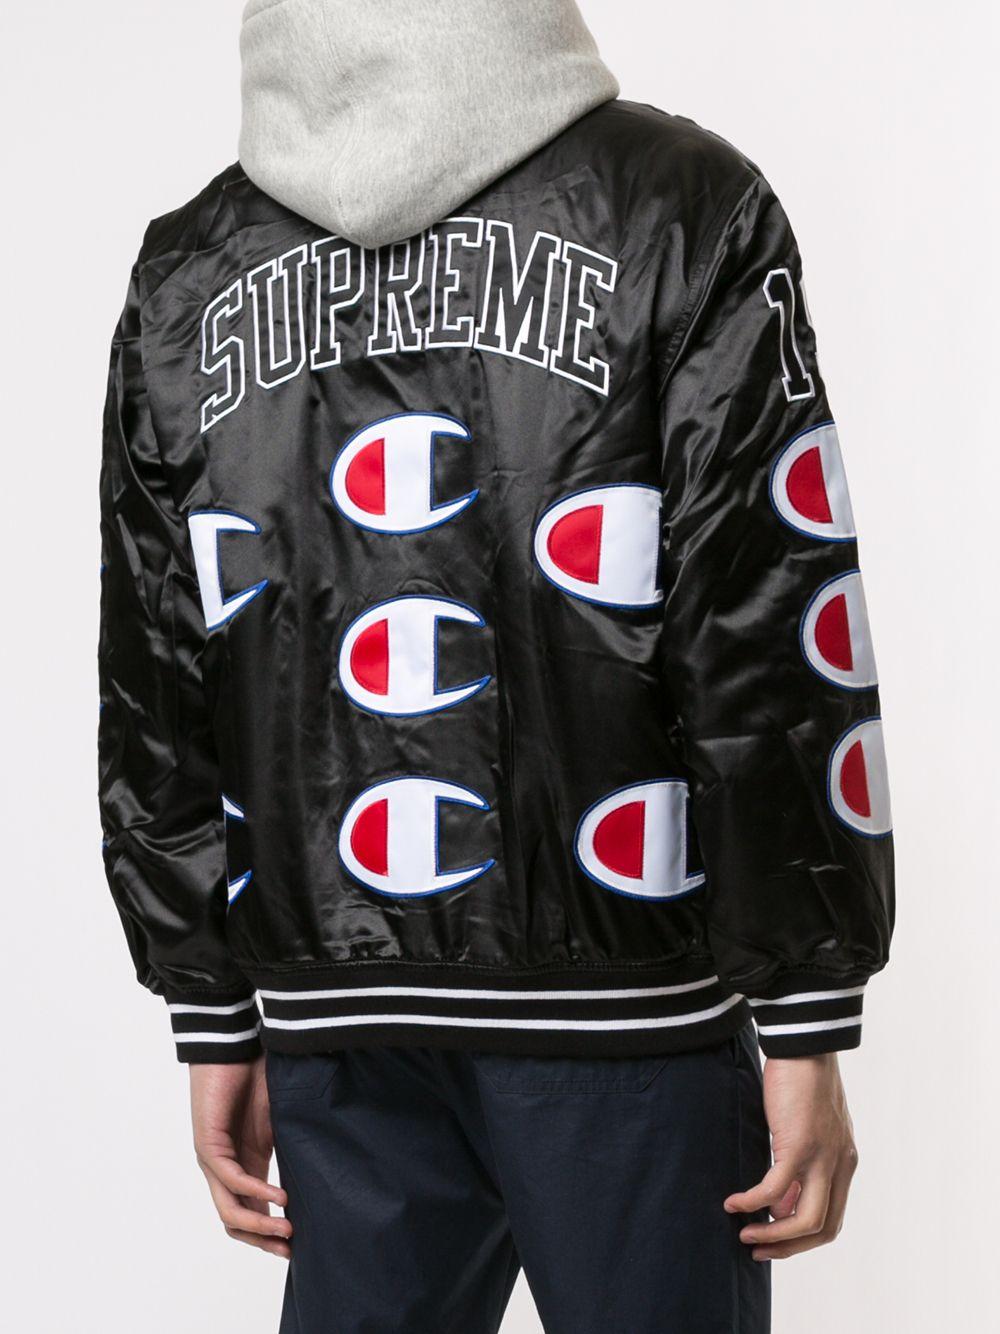 Supreme X Champion Hooded Varsity Jacket in Black for Men - Lyst